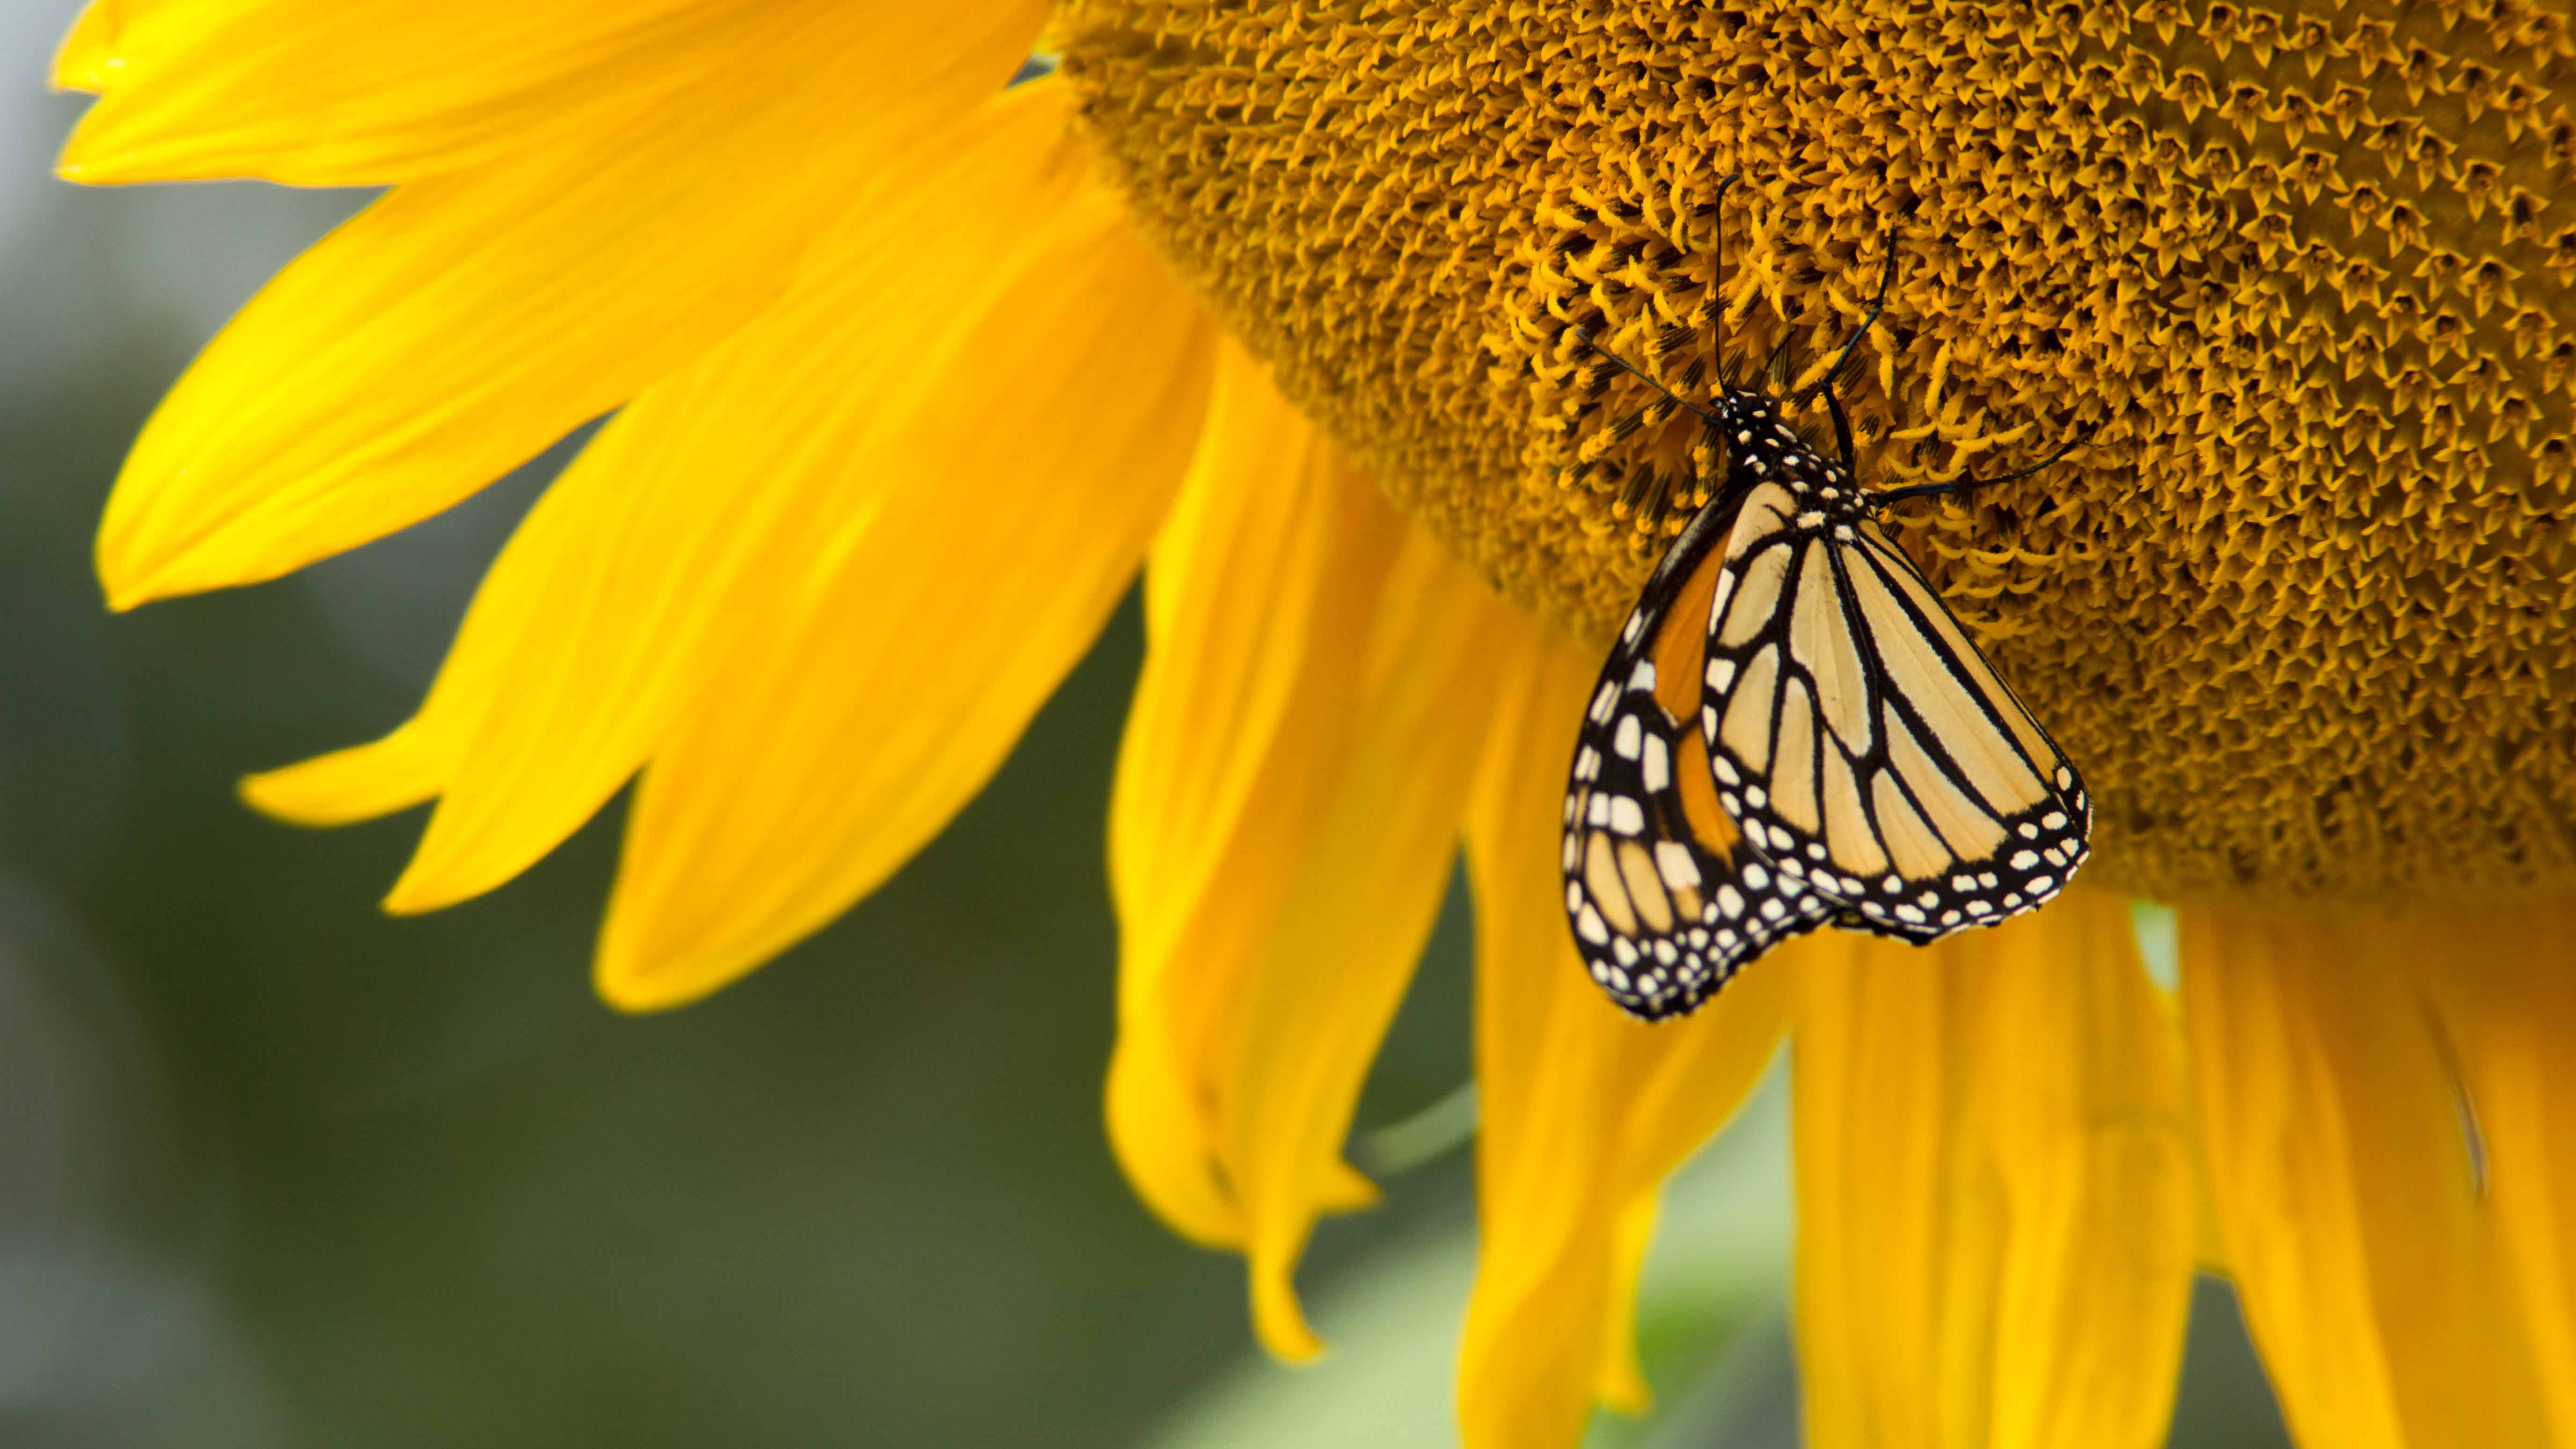 Butterfly on a sunflower.